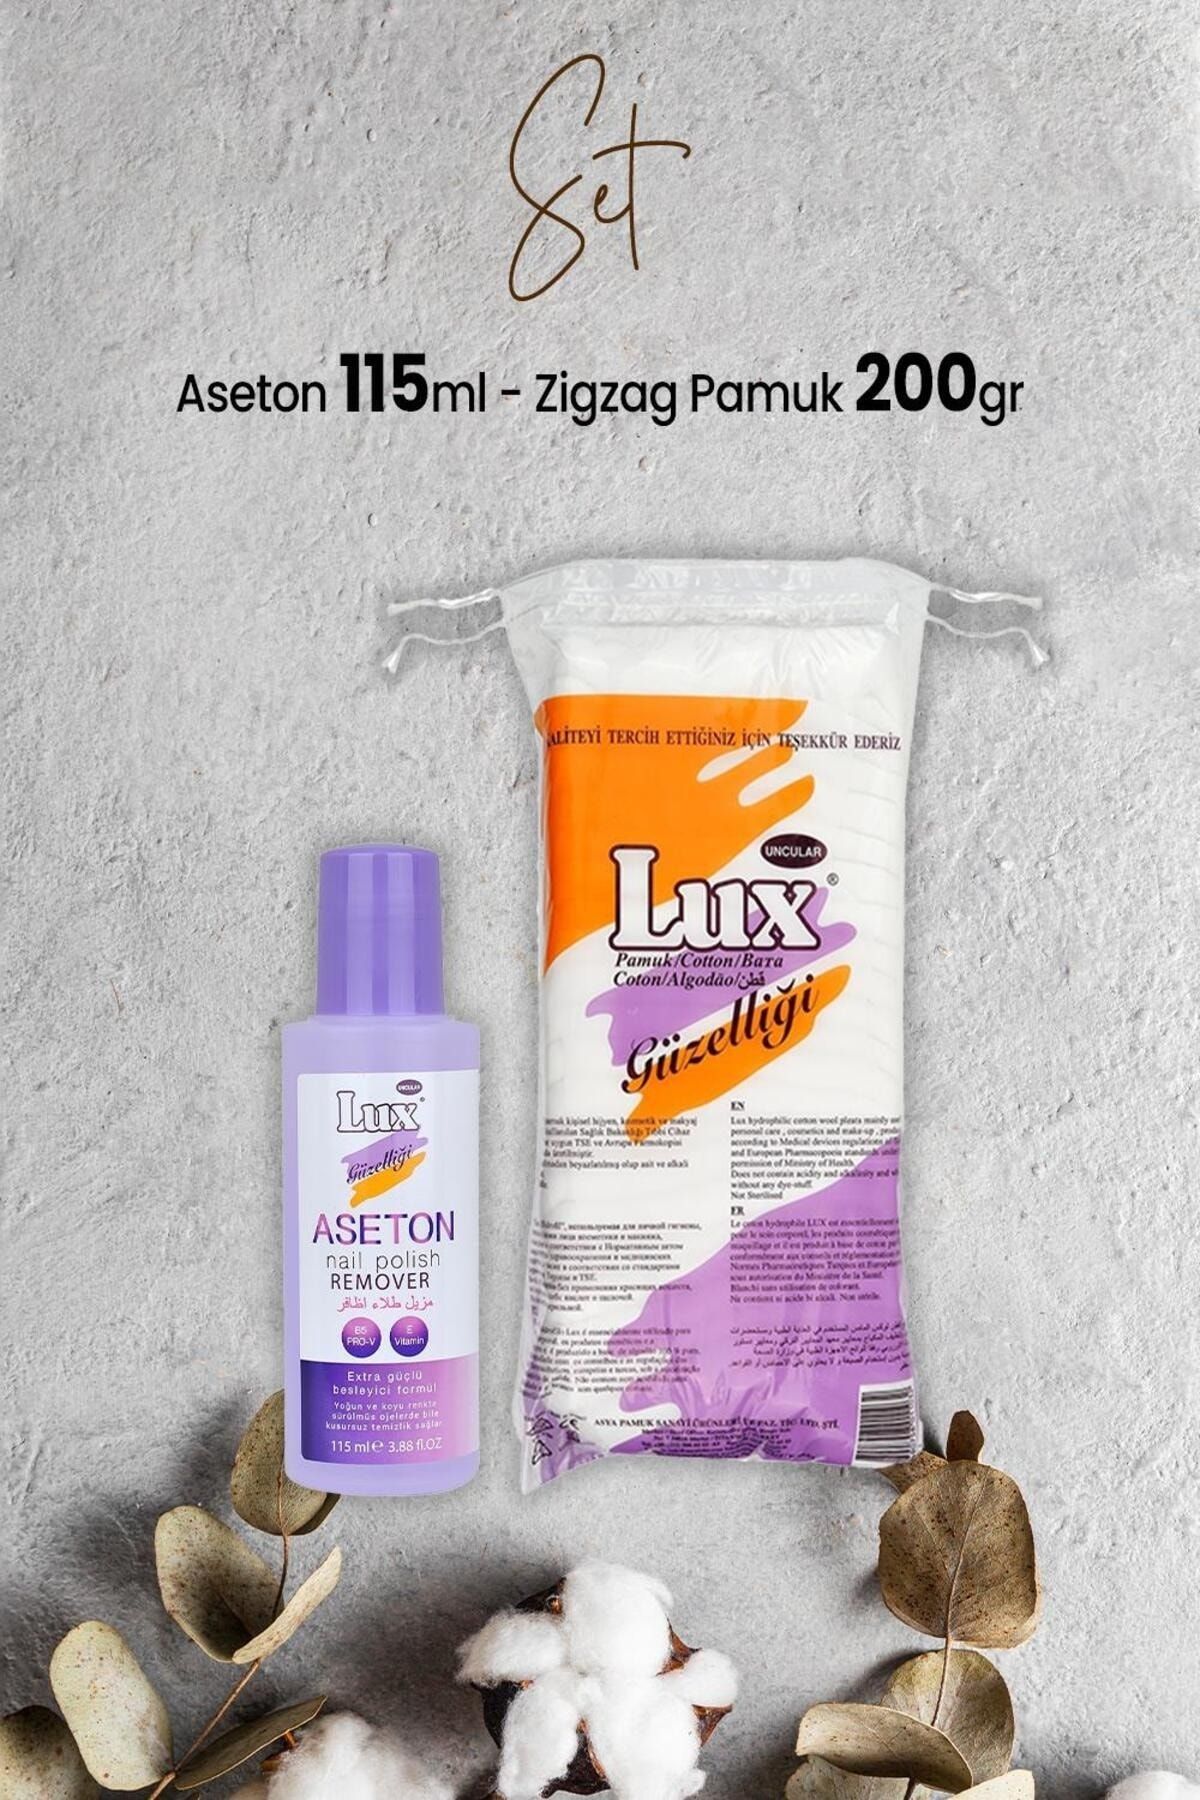 LUX Aseton 115 ml ve Zigzag Pamuk 200 gr